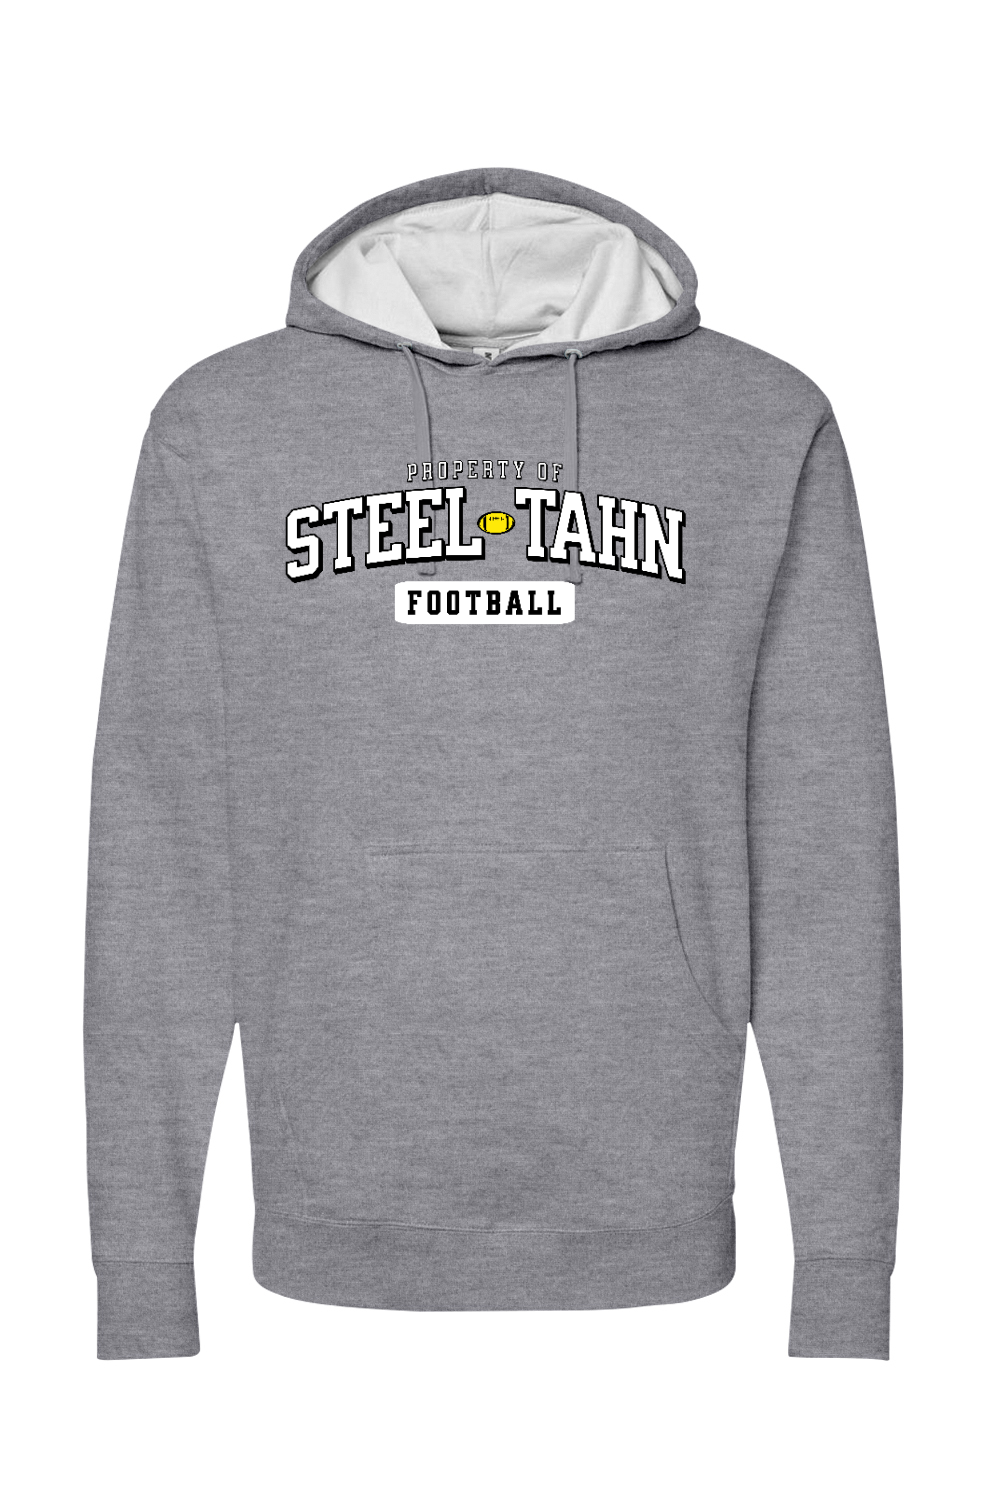 Property of Steel Tahn Football - Hoodie - Yinzylvania